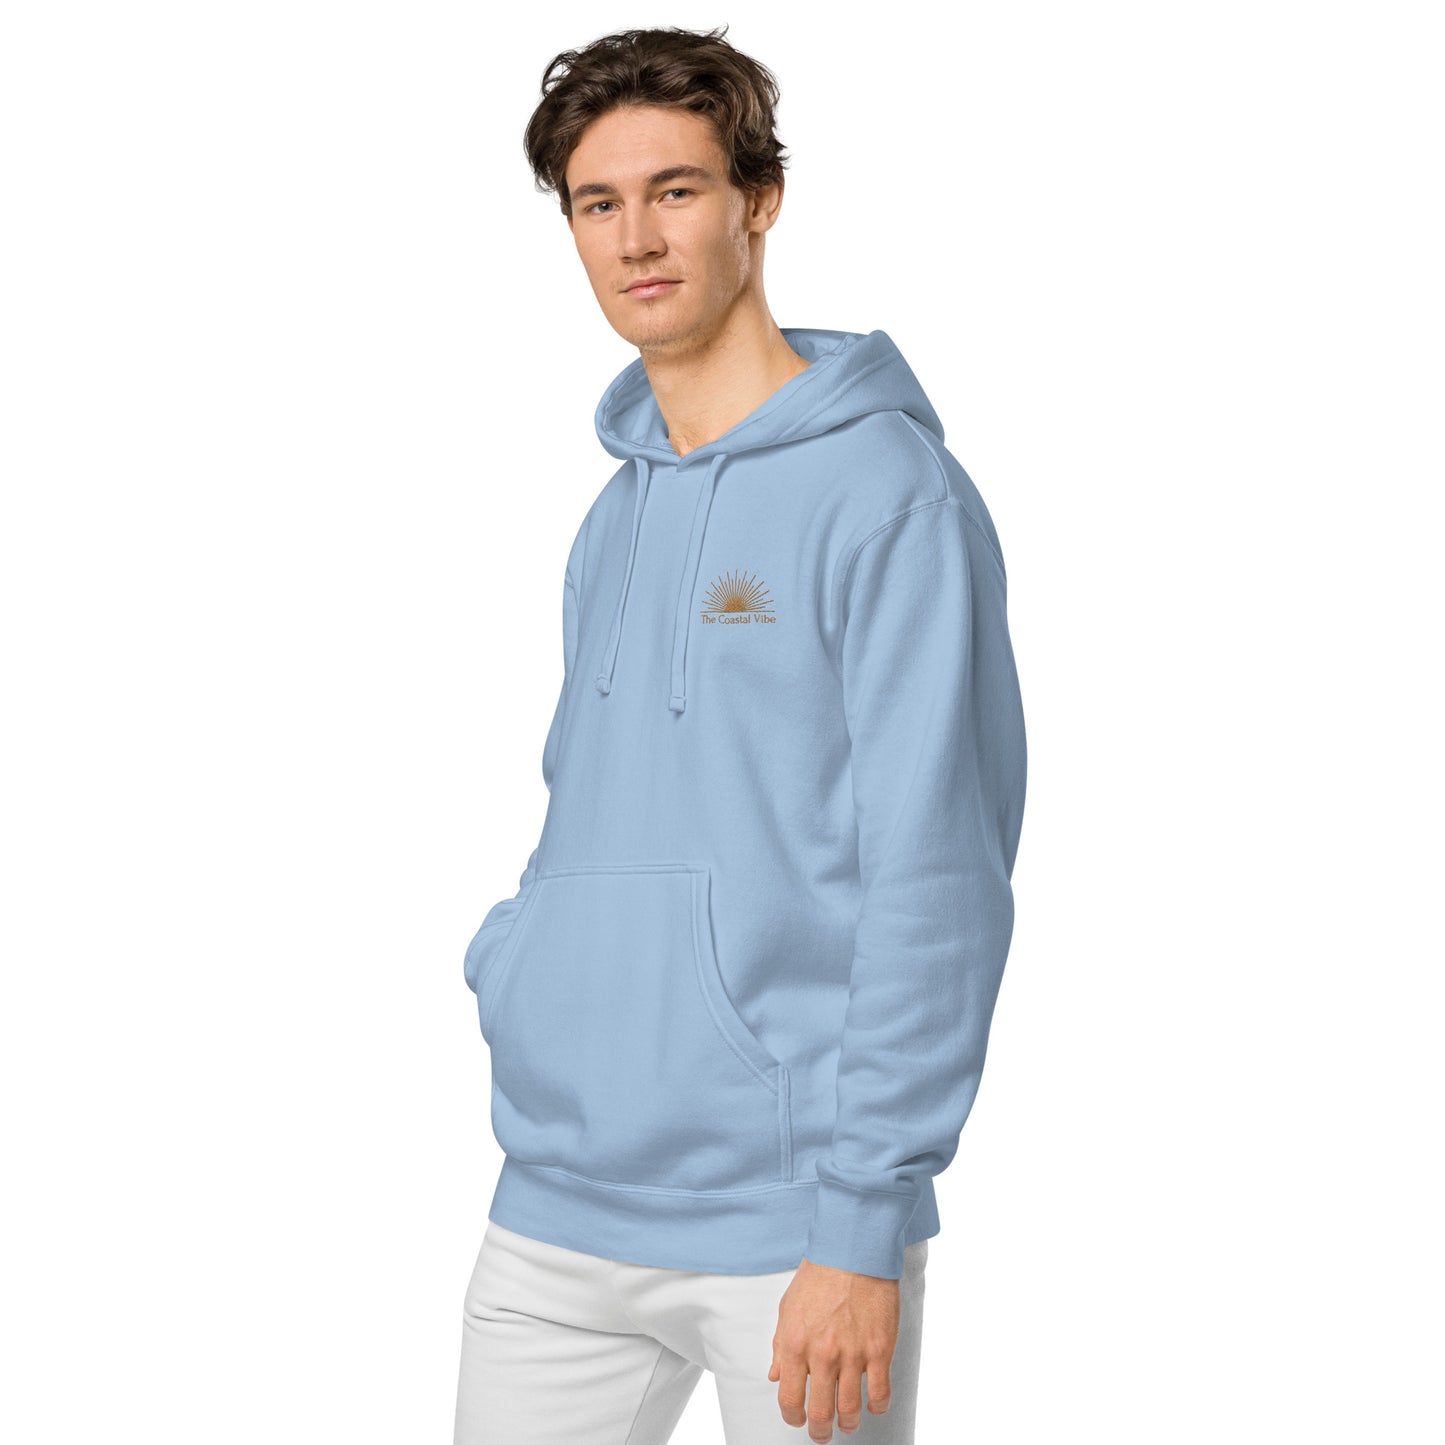 Unisex pigment-dyed hoodie - The Coastal Vibe